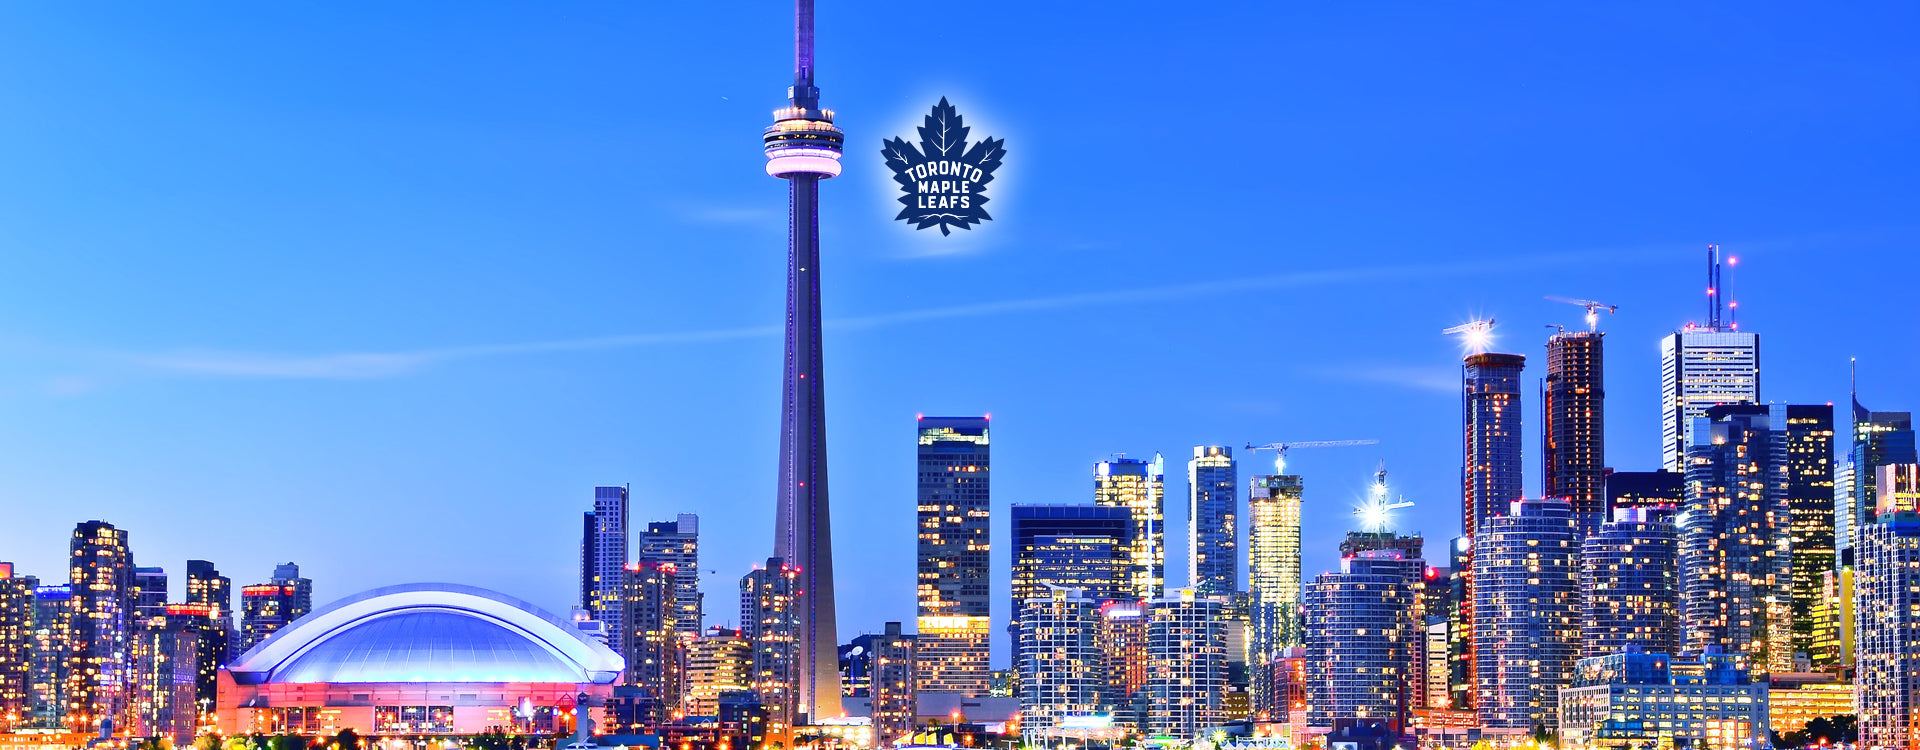 Toronto Maple Leafs Home WoodJersey – WoodJerseys